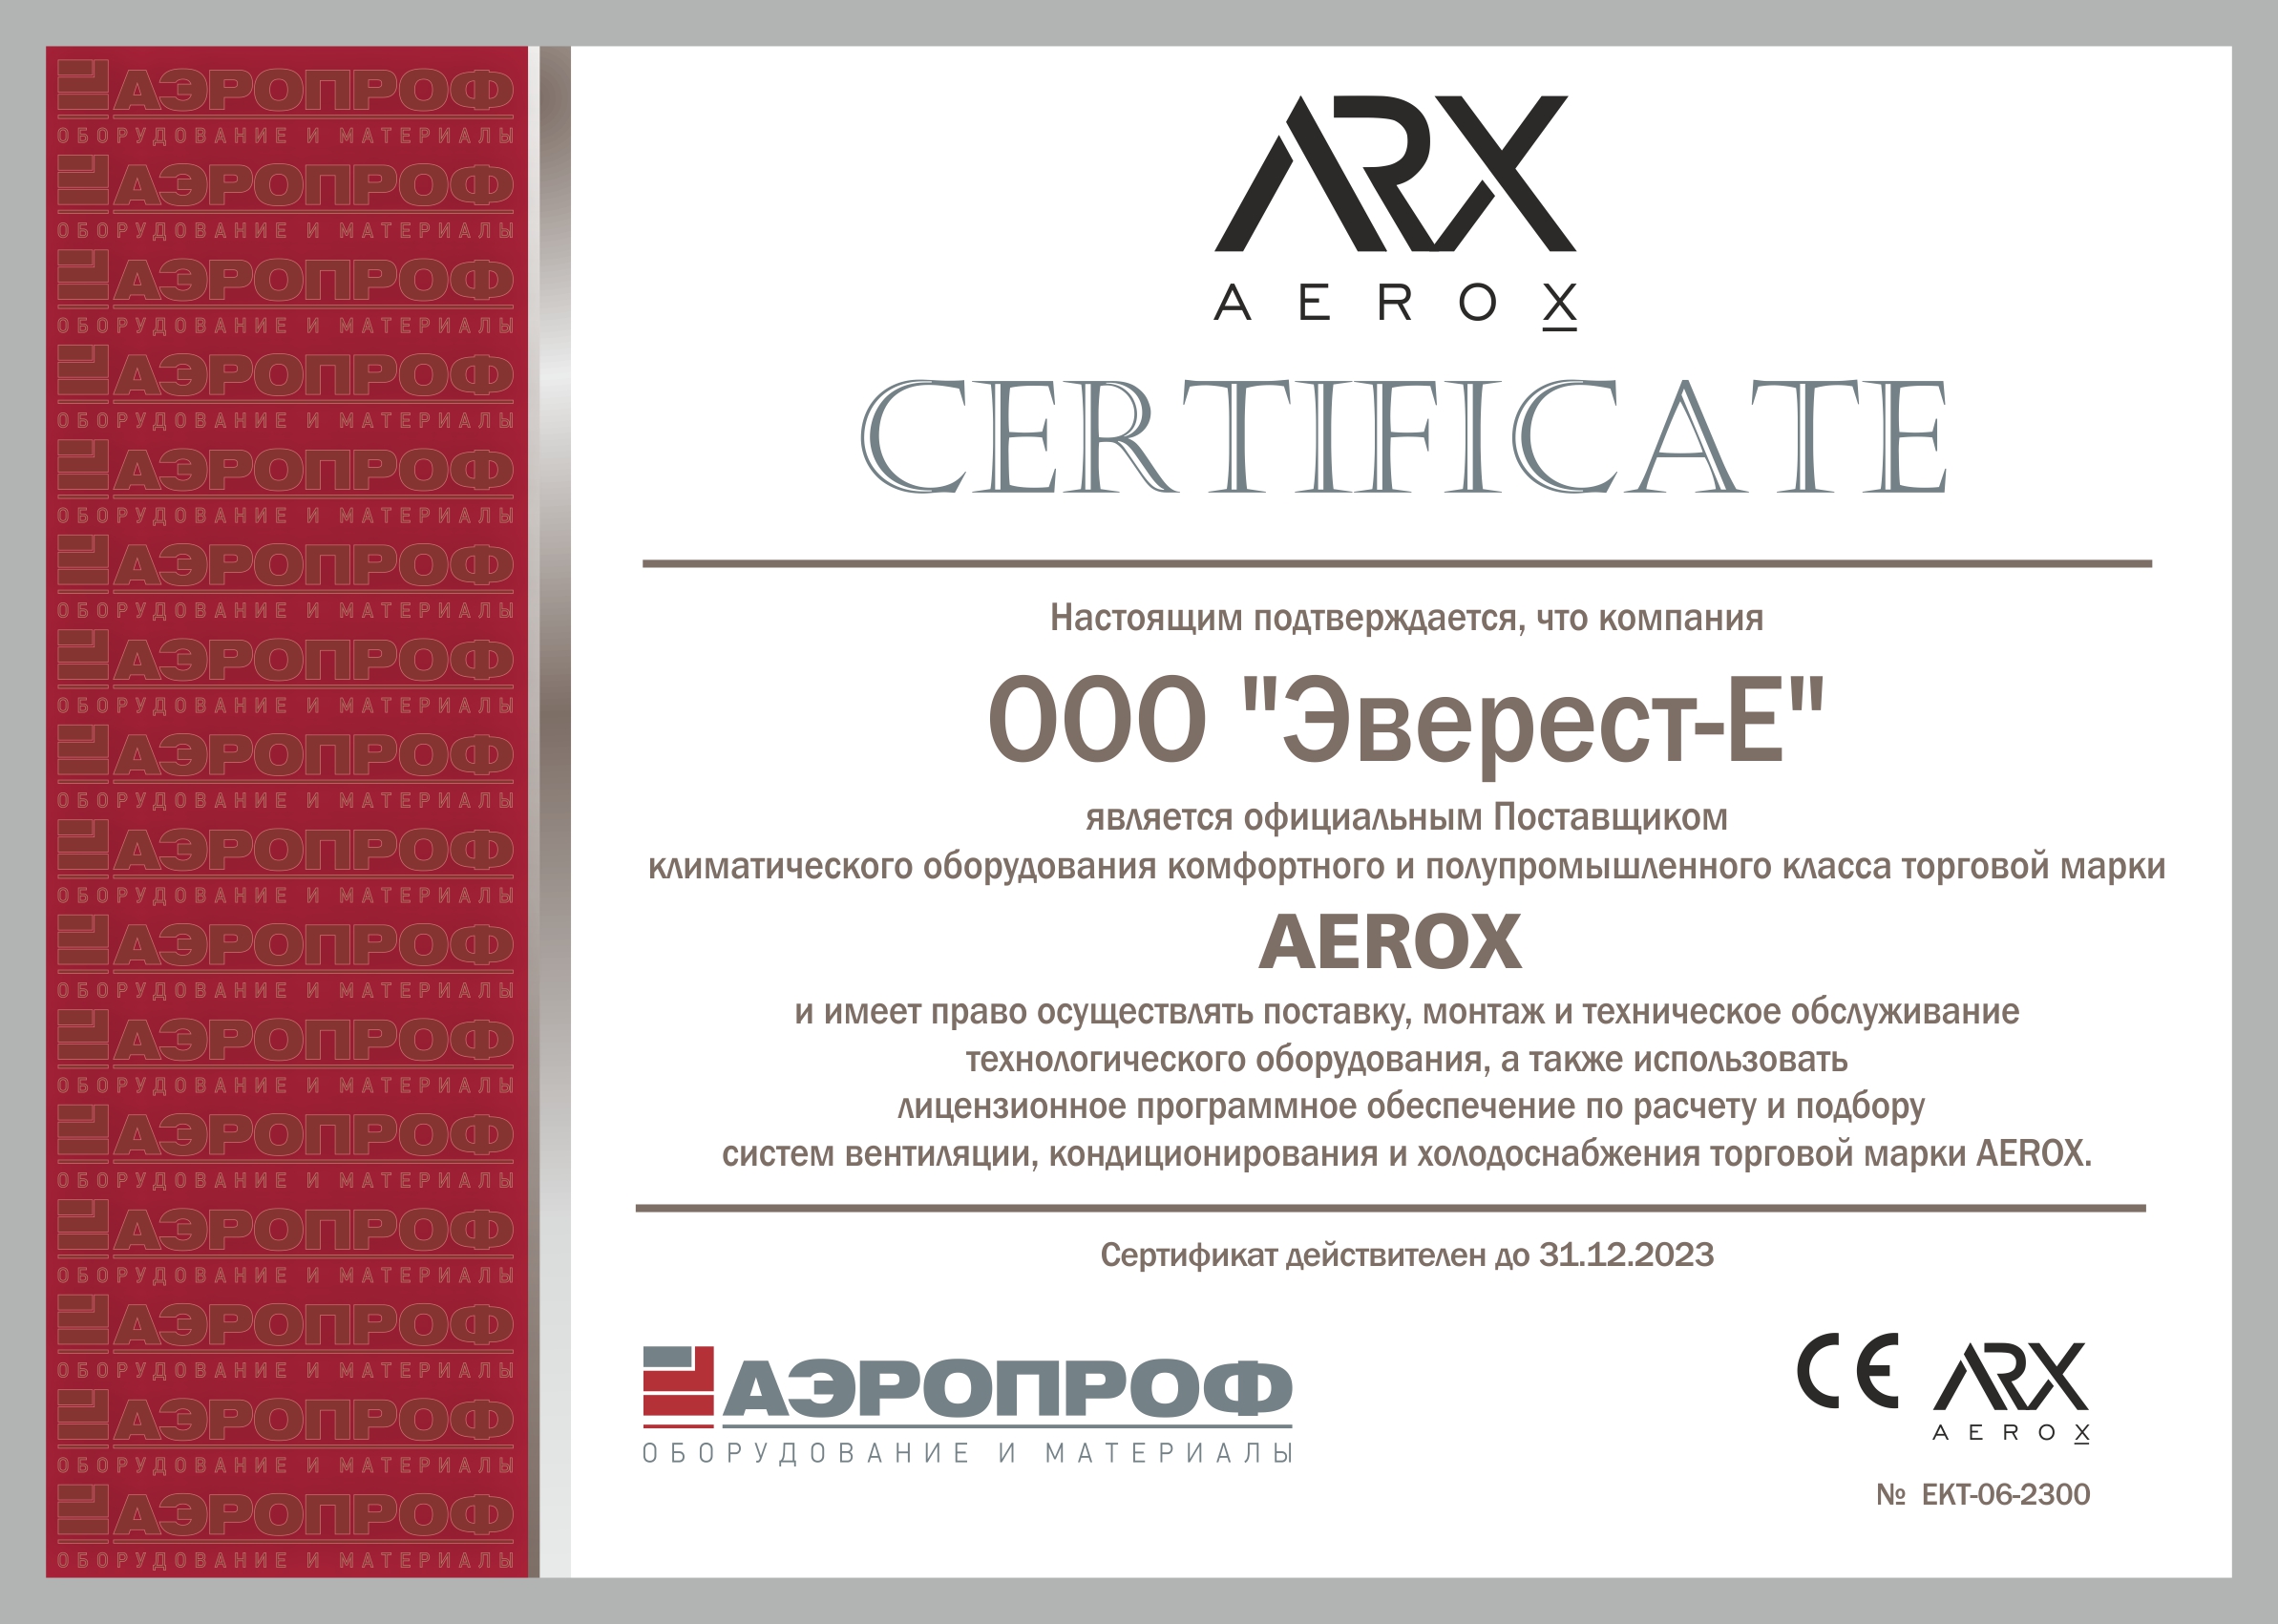 sert23-everest-arx Kondicioner Aero ALRS-II-36IHA4-01/ALRS-II-36OHA4-01 kypit v Ekaterinbyrge v internet-magazine KlimatMarket96.ry Сертификат официального дилера